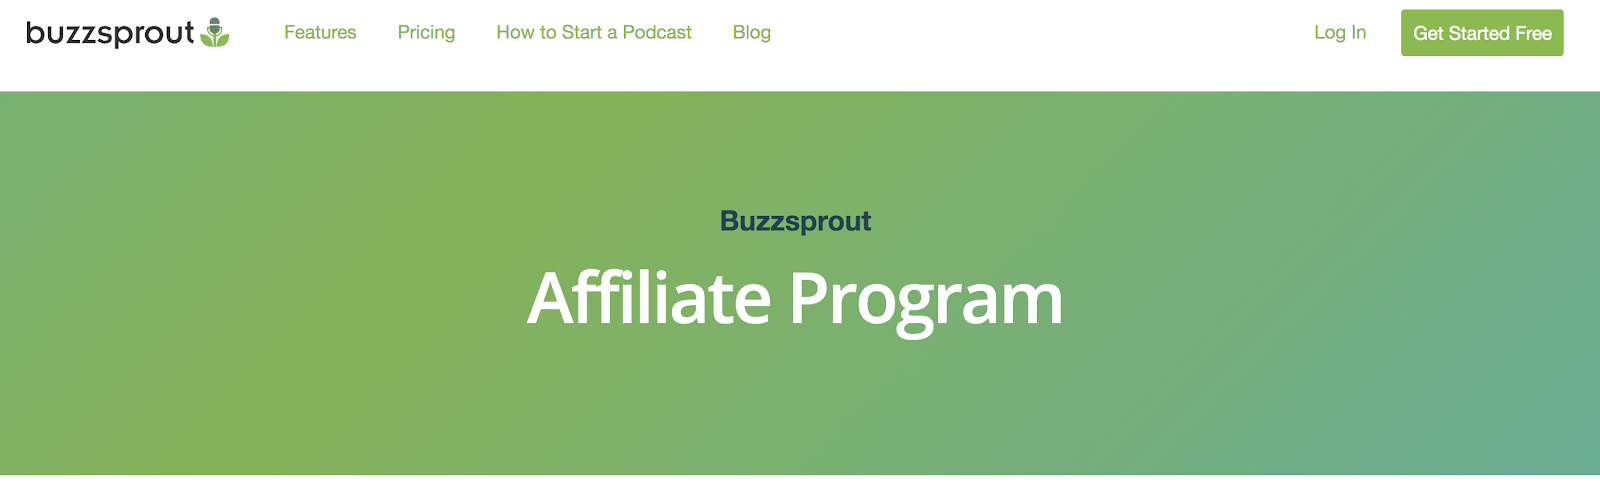 Buzzsprout Affiliate Program Landing Page (Screenshot)